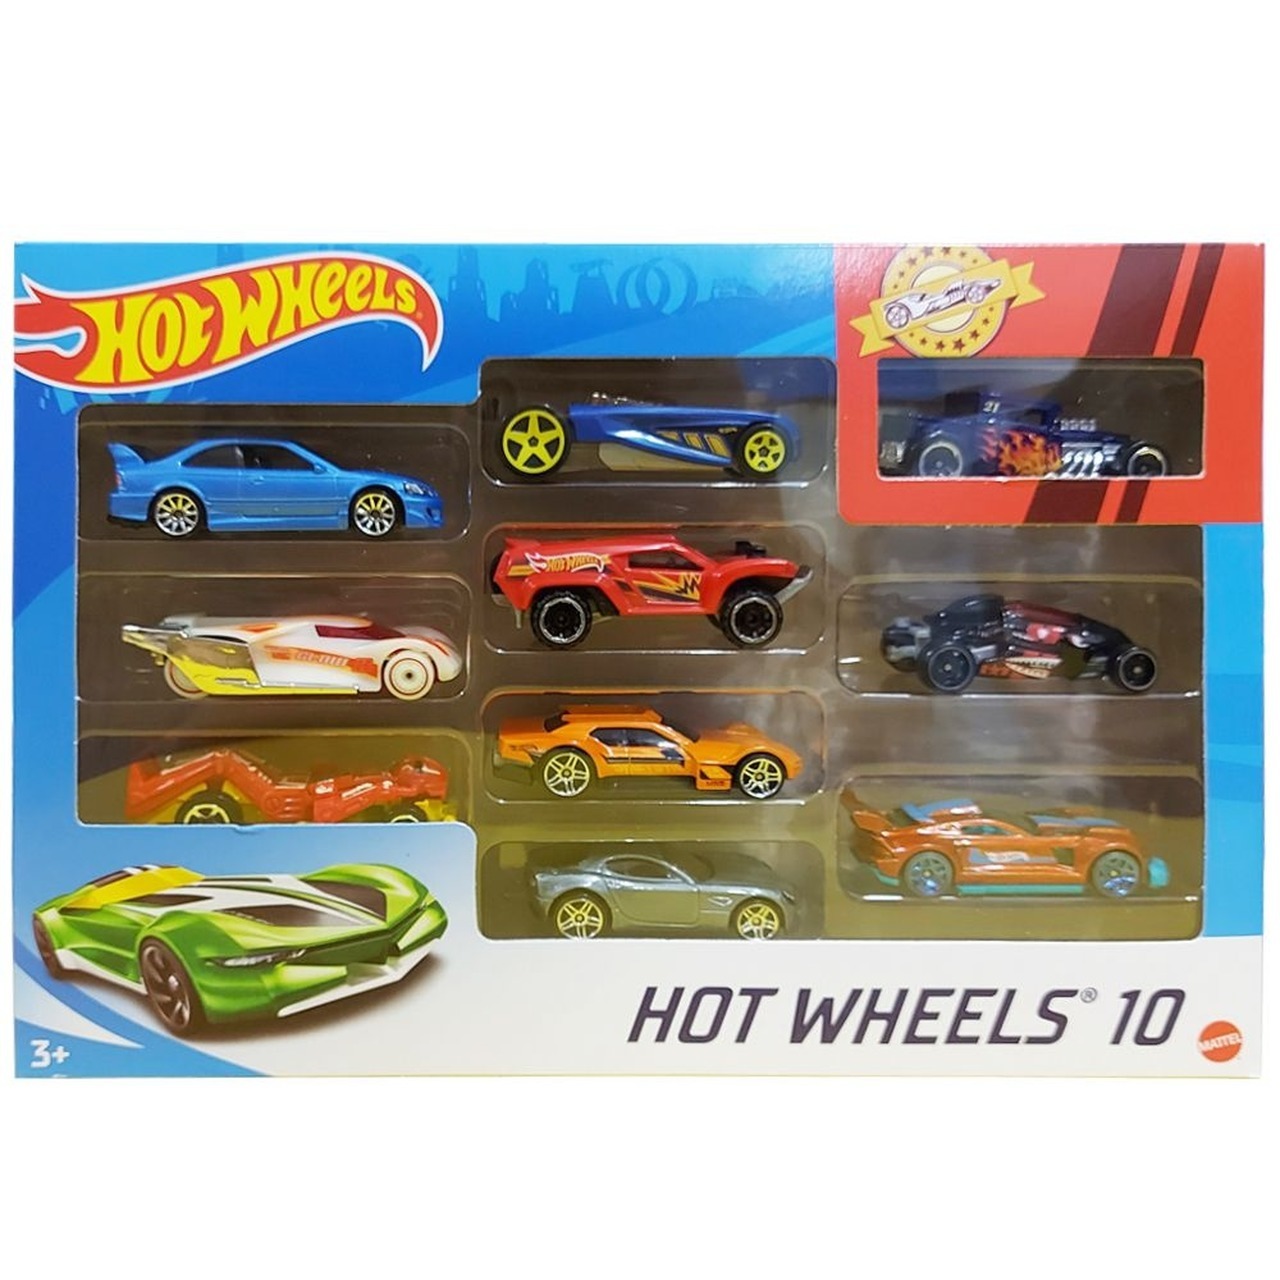 Hot Wheels Kit com 10 Carrinhos Sortidos - Mattel 54886